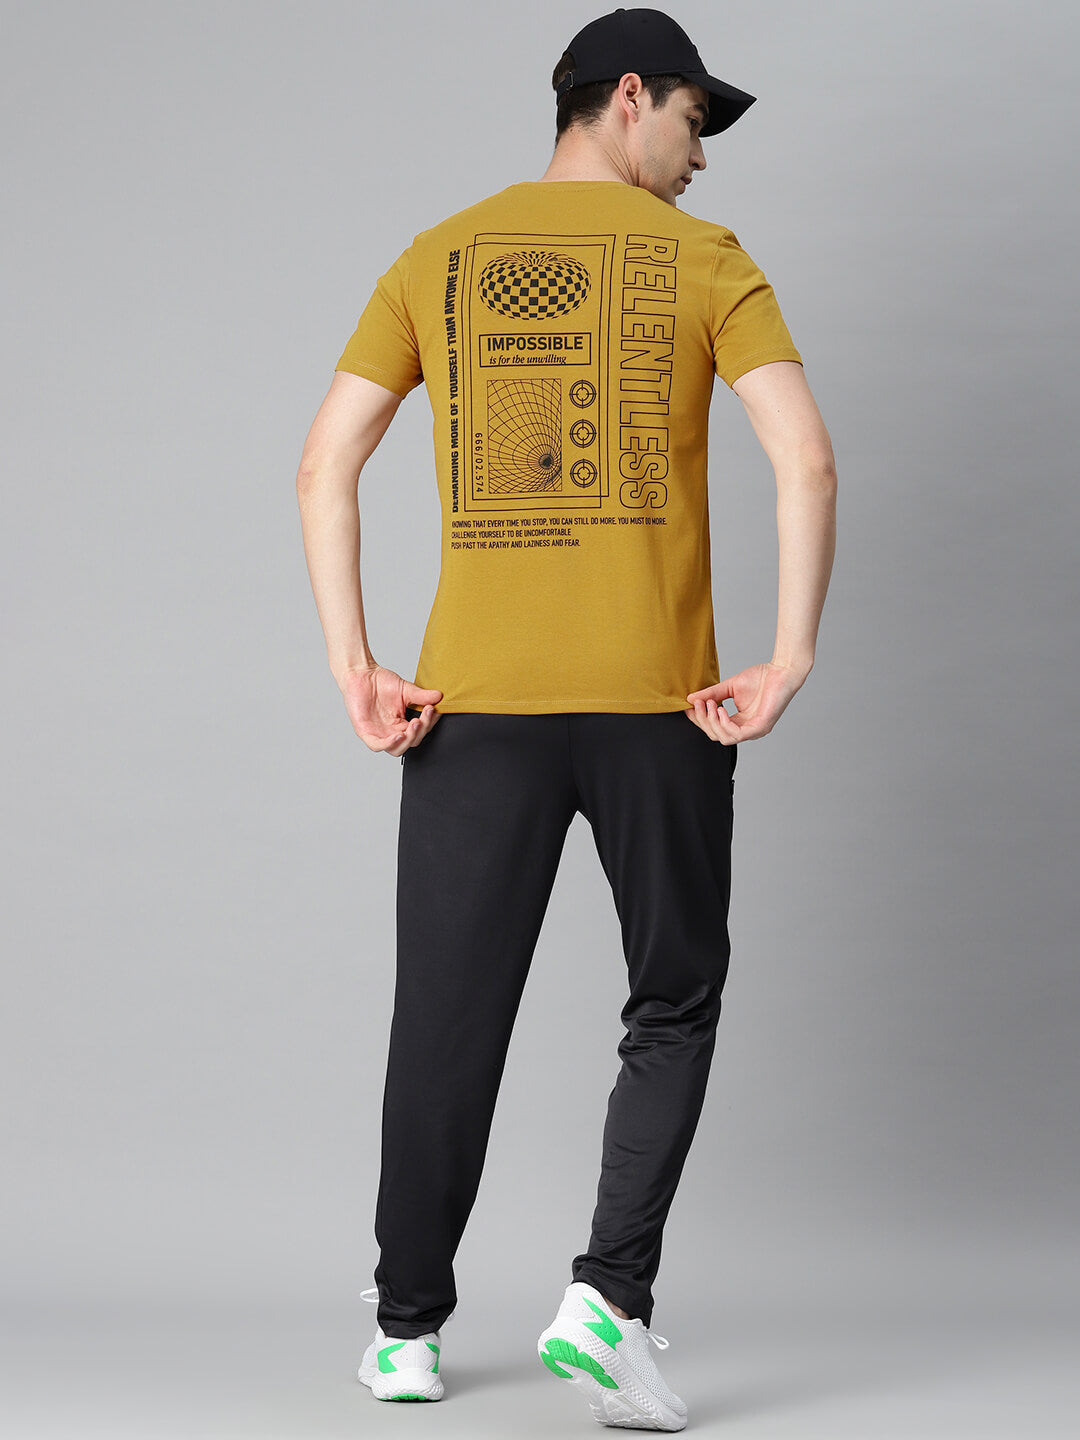 Alcis Men Mustrad Yellow Printed Sports T-shirt